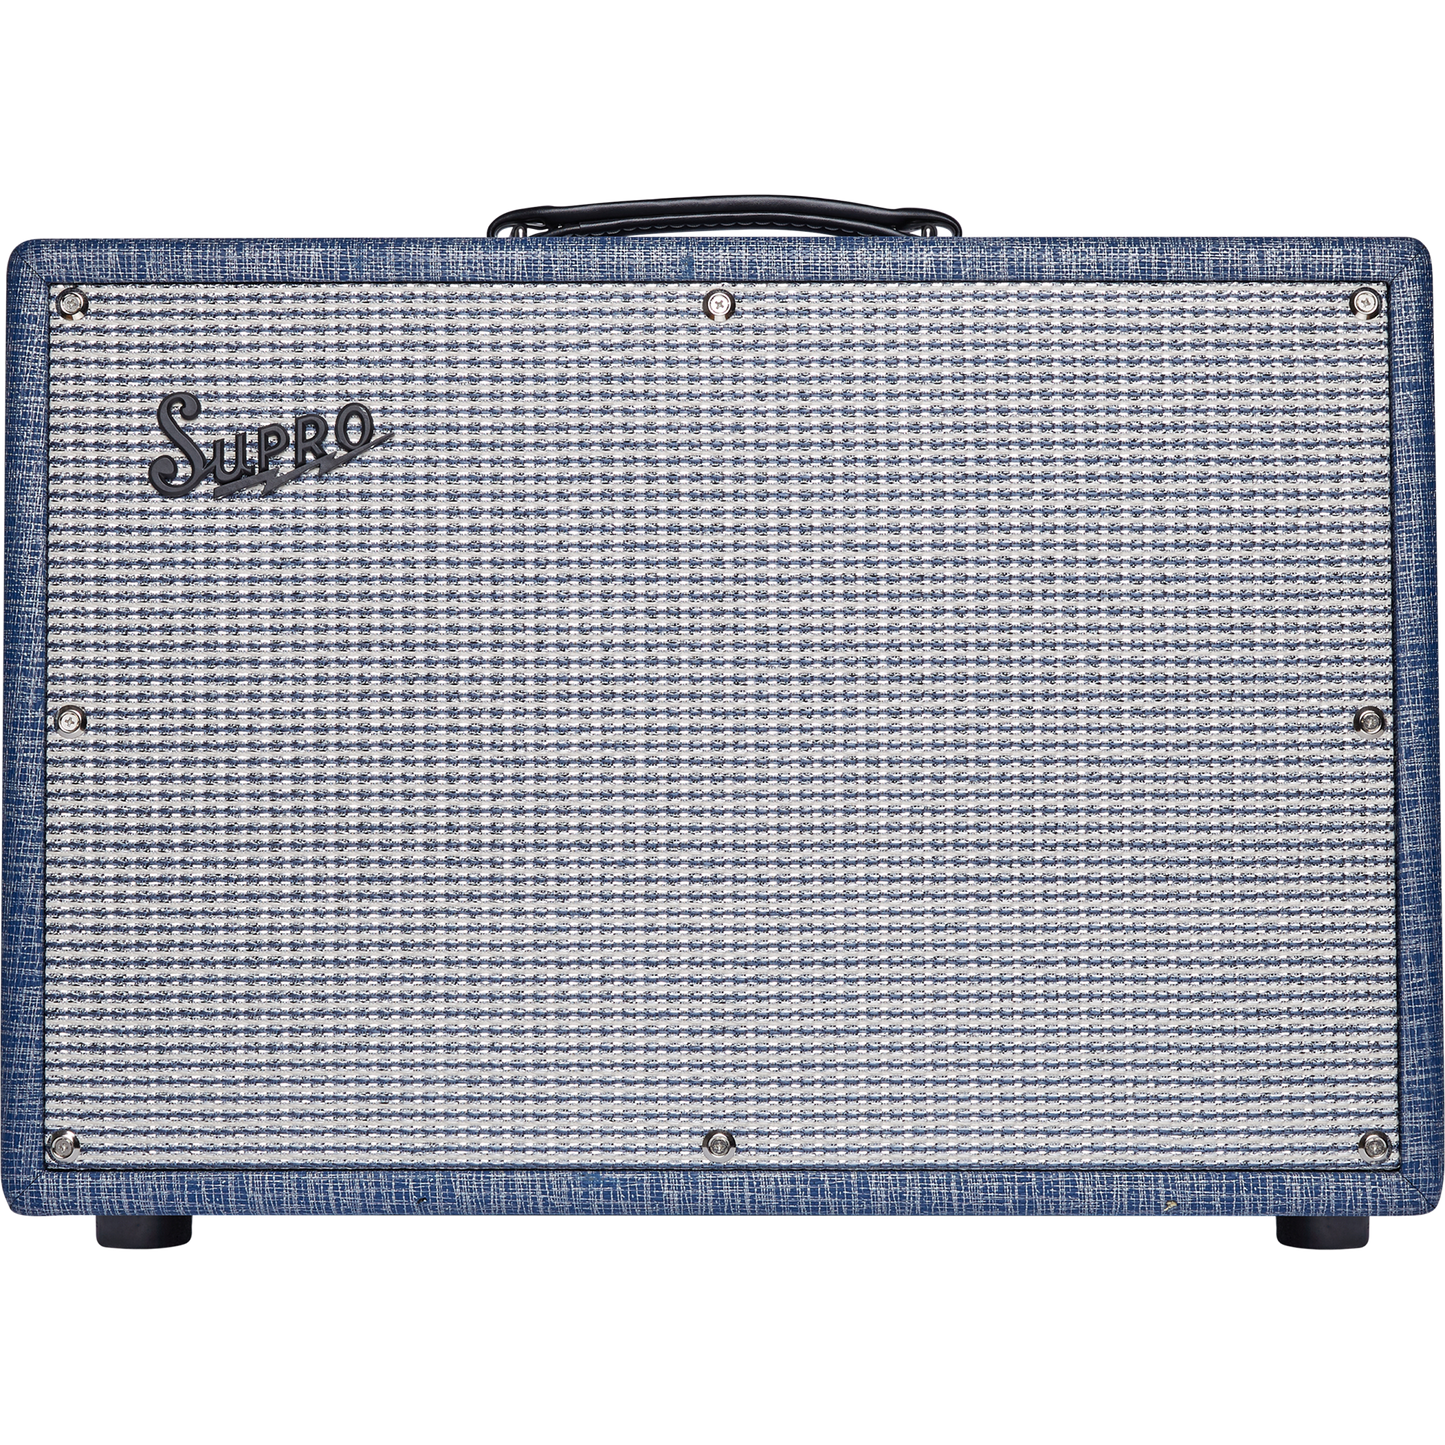 Supro Keeley Custom 12 1x12” Combo Amplifier